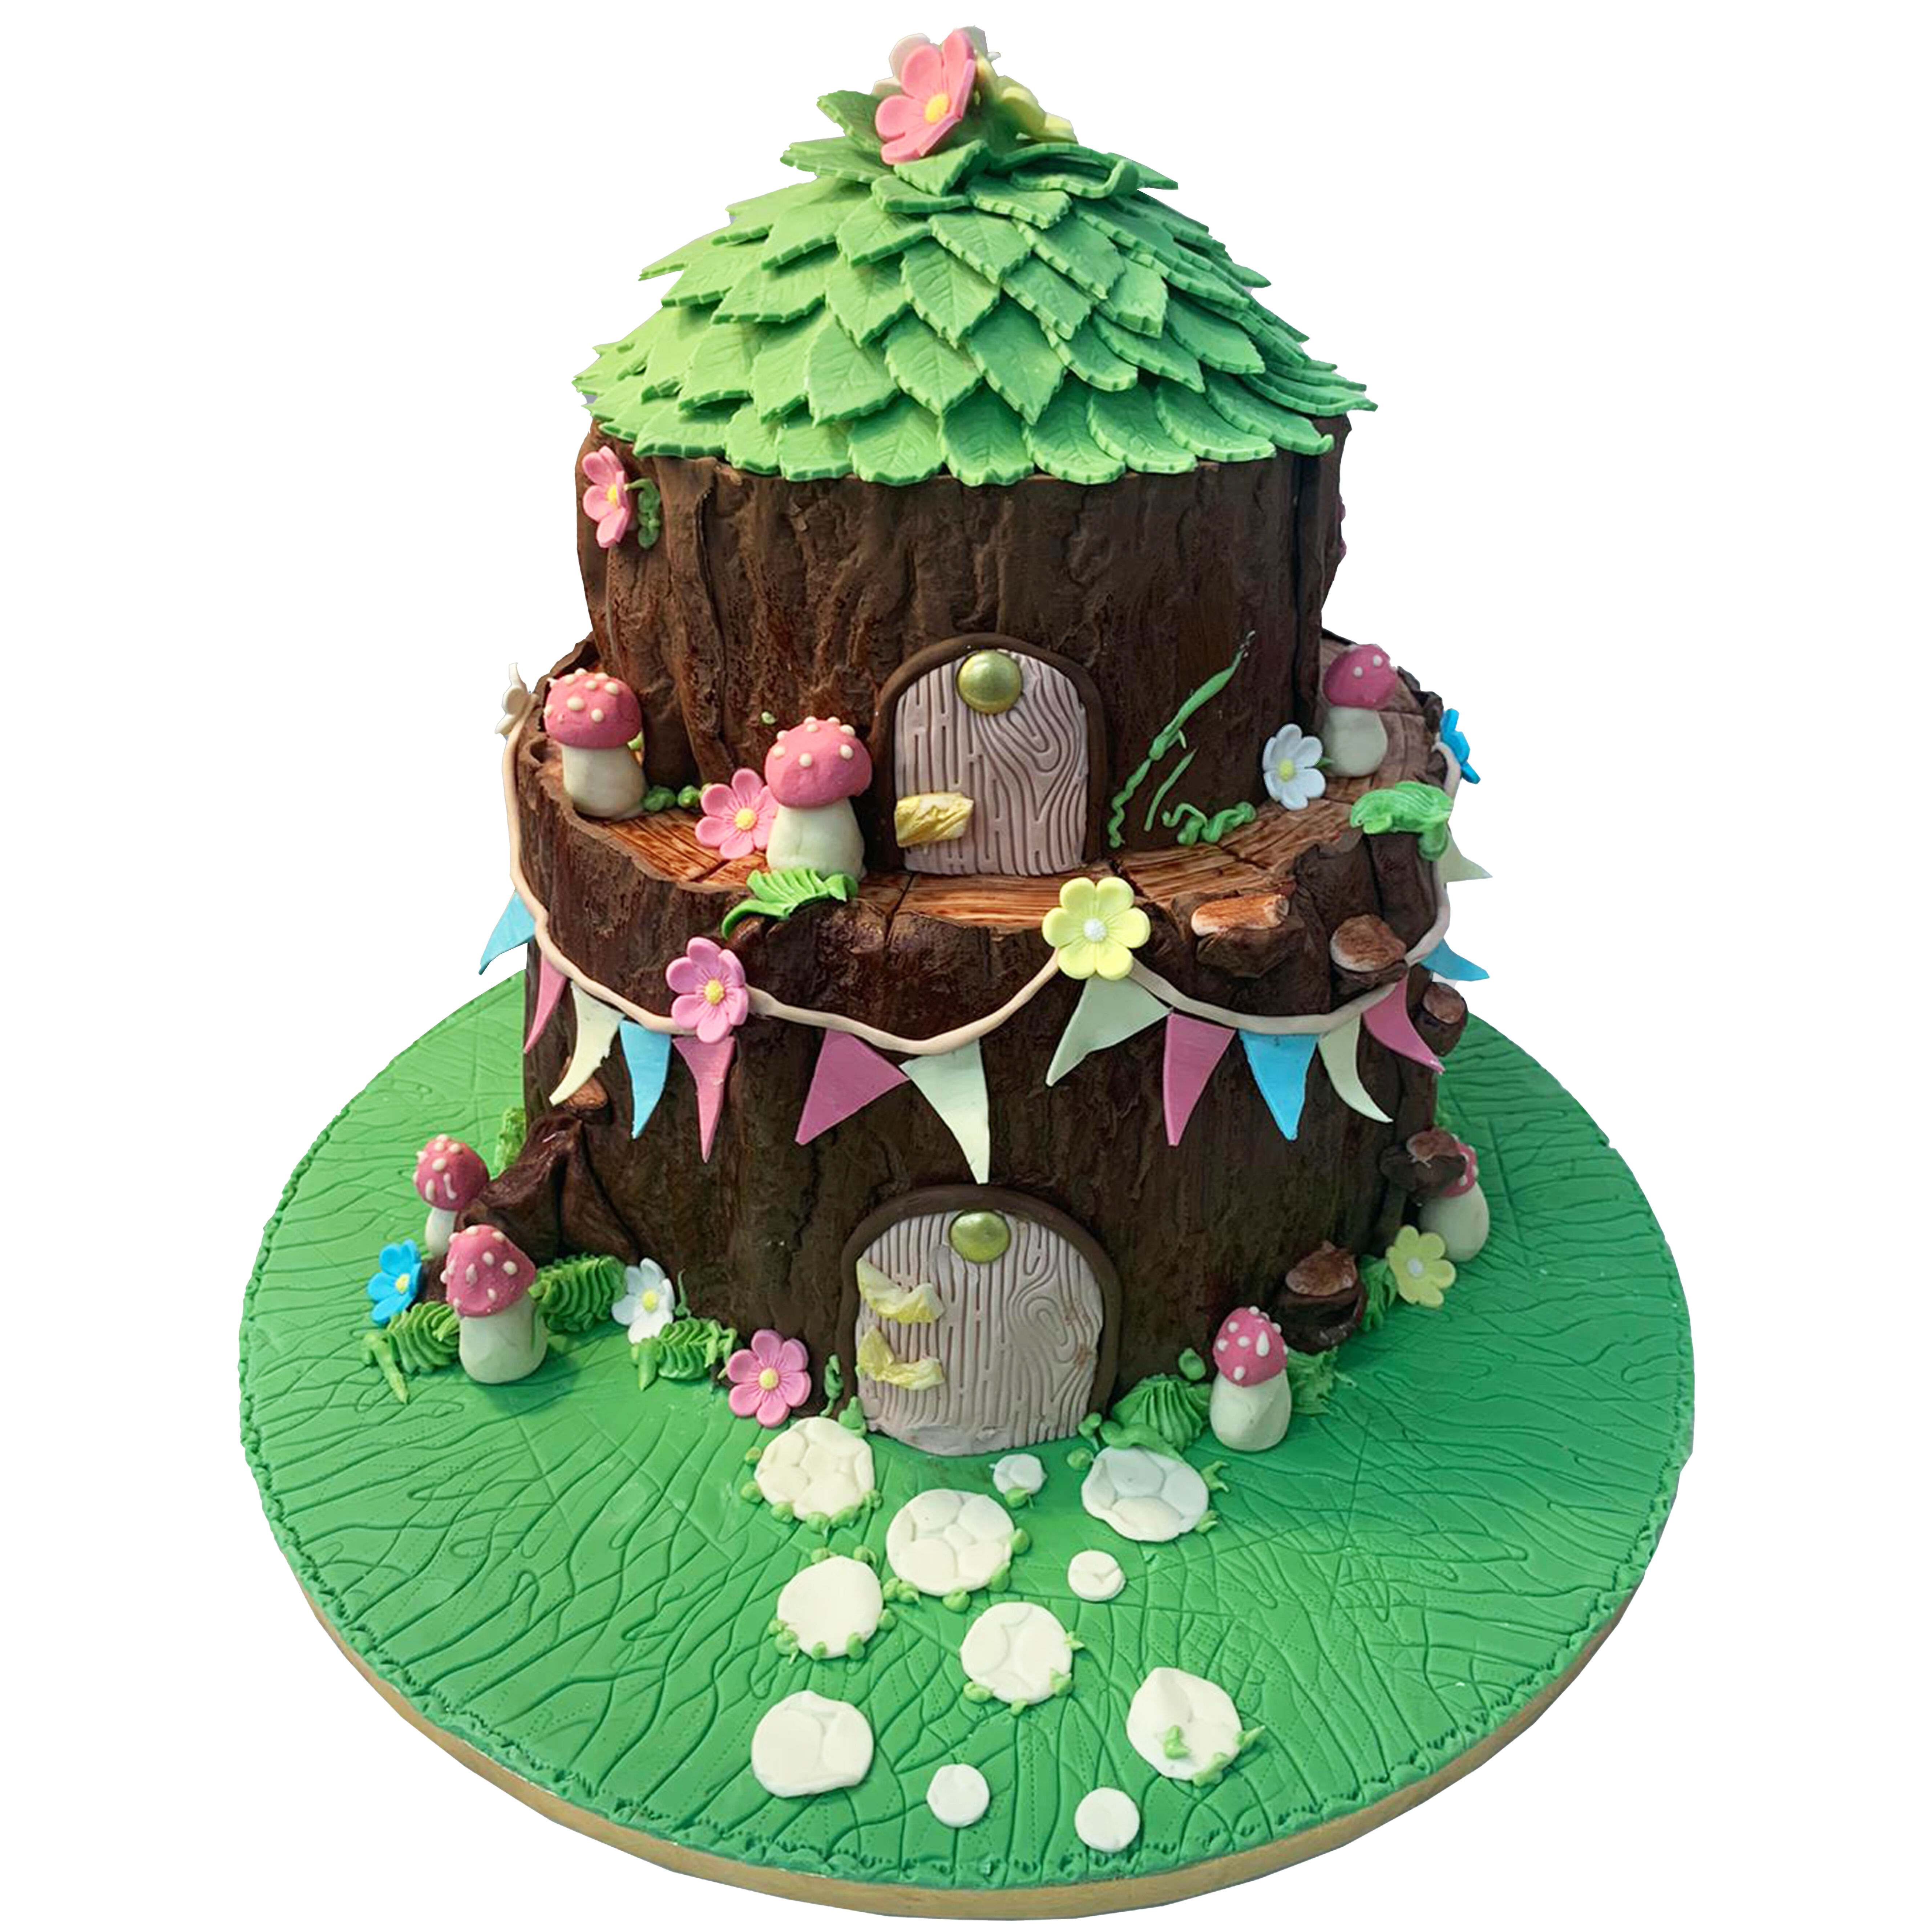 Enchanted Forest Tree House Cake - Veena Azmanov